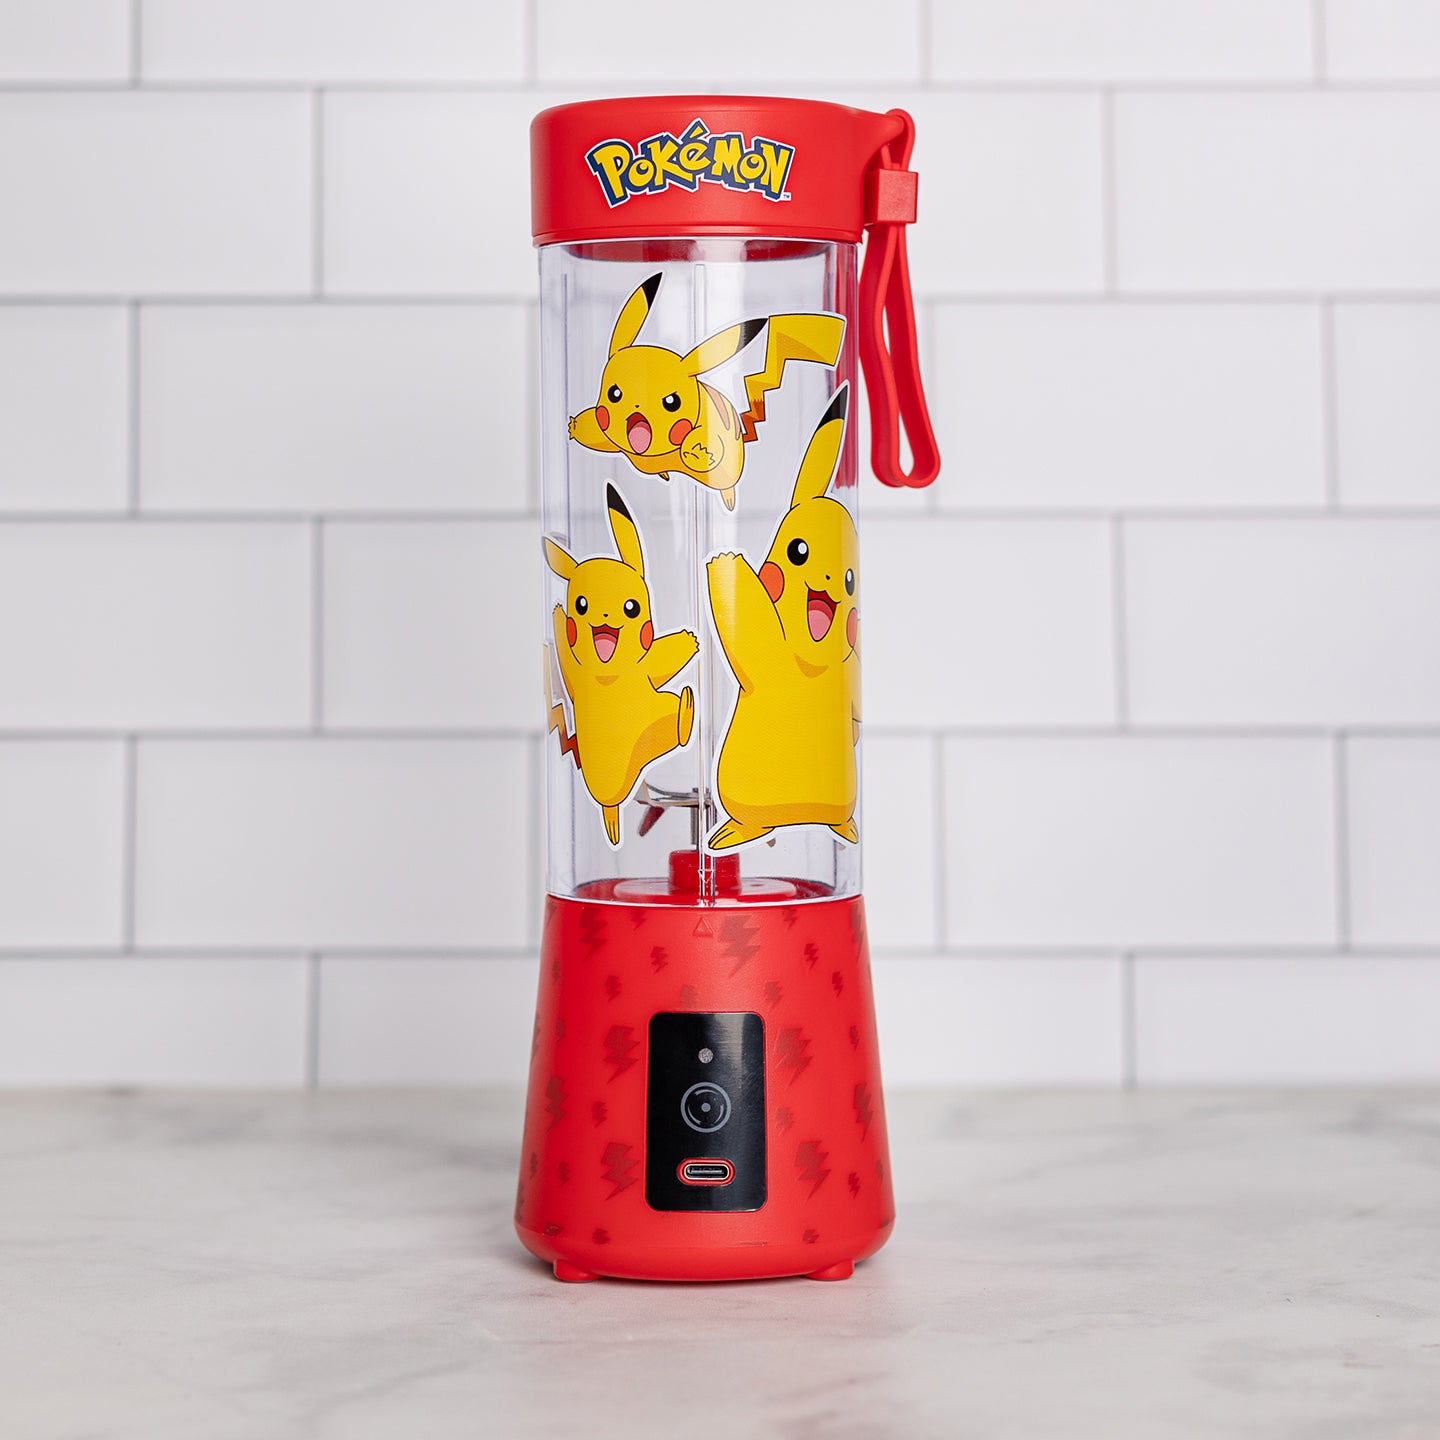 Uncanny Brands Hello Kitty and Friends Cinnamoroll Coffee Mug with Electric  Mug Warmer